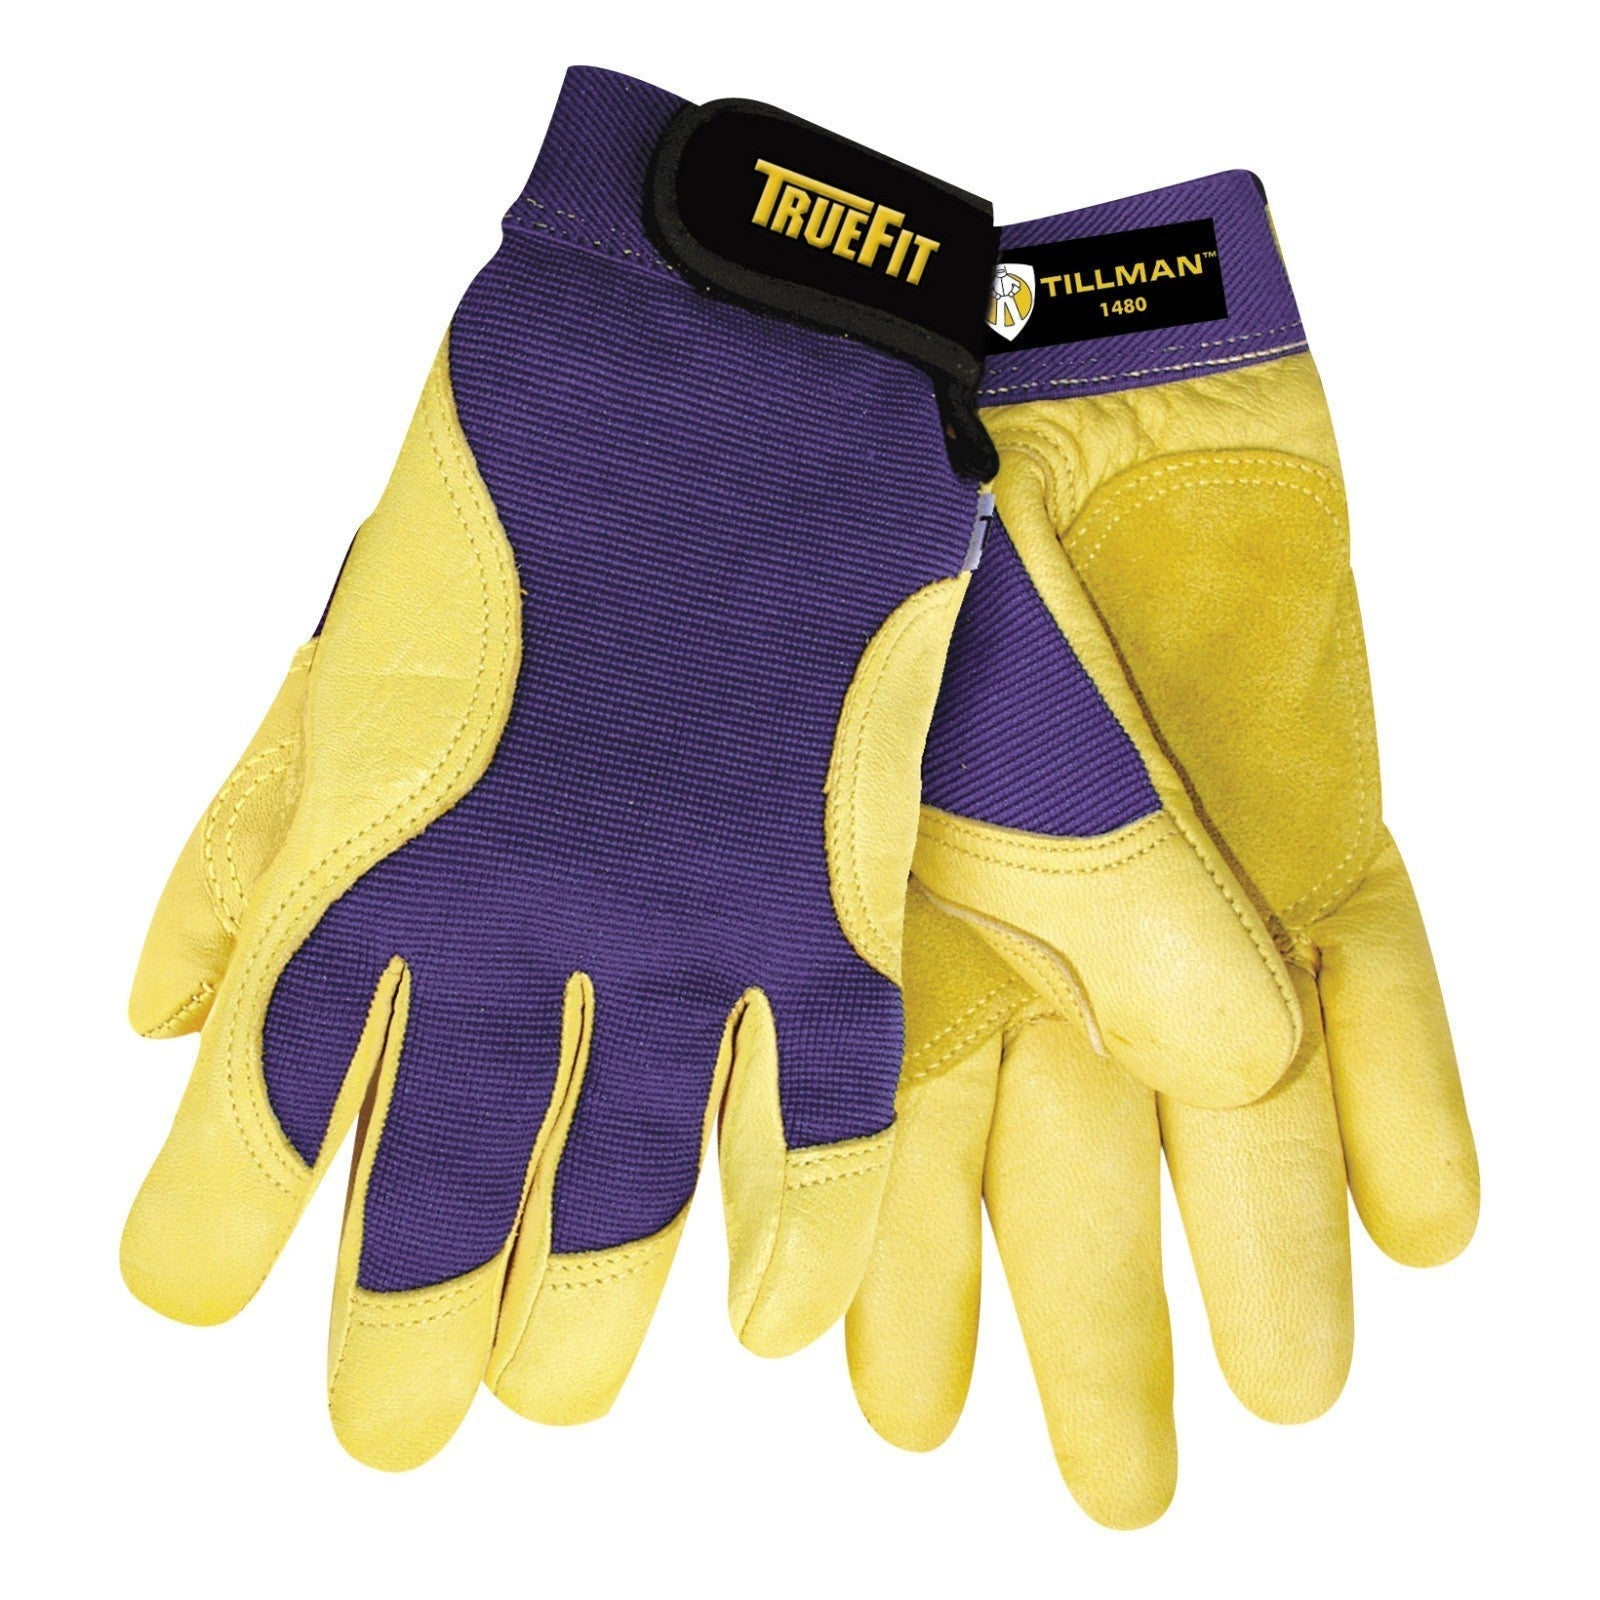 Tillman 1480 TrueFit Top Grain Deerskin Performance Gloves